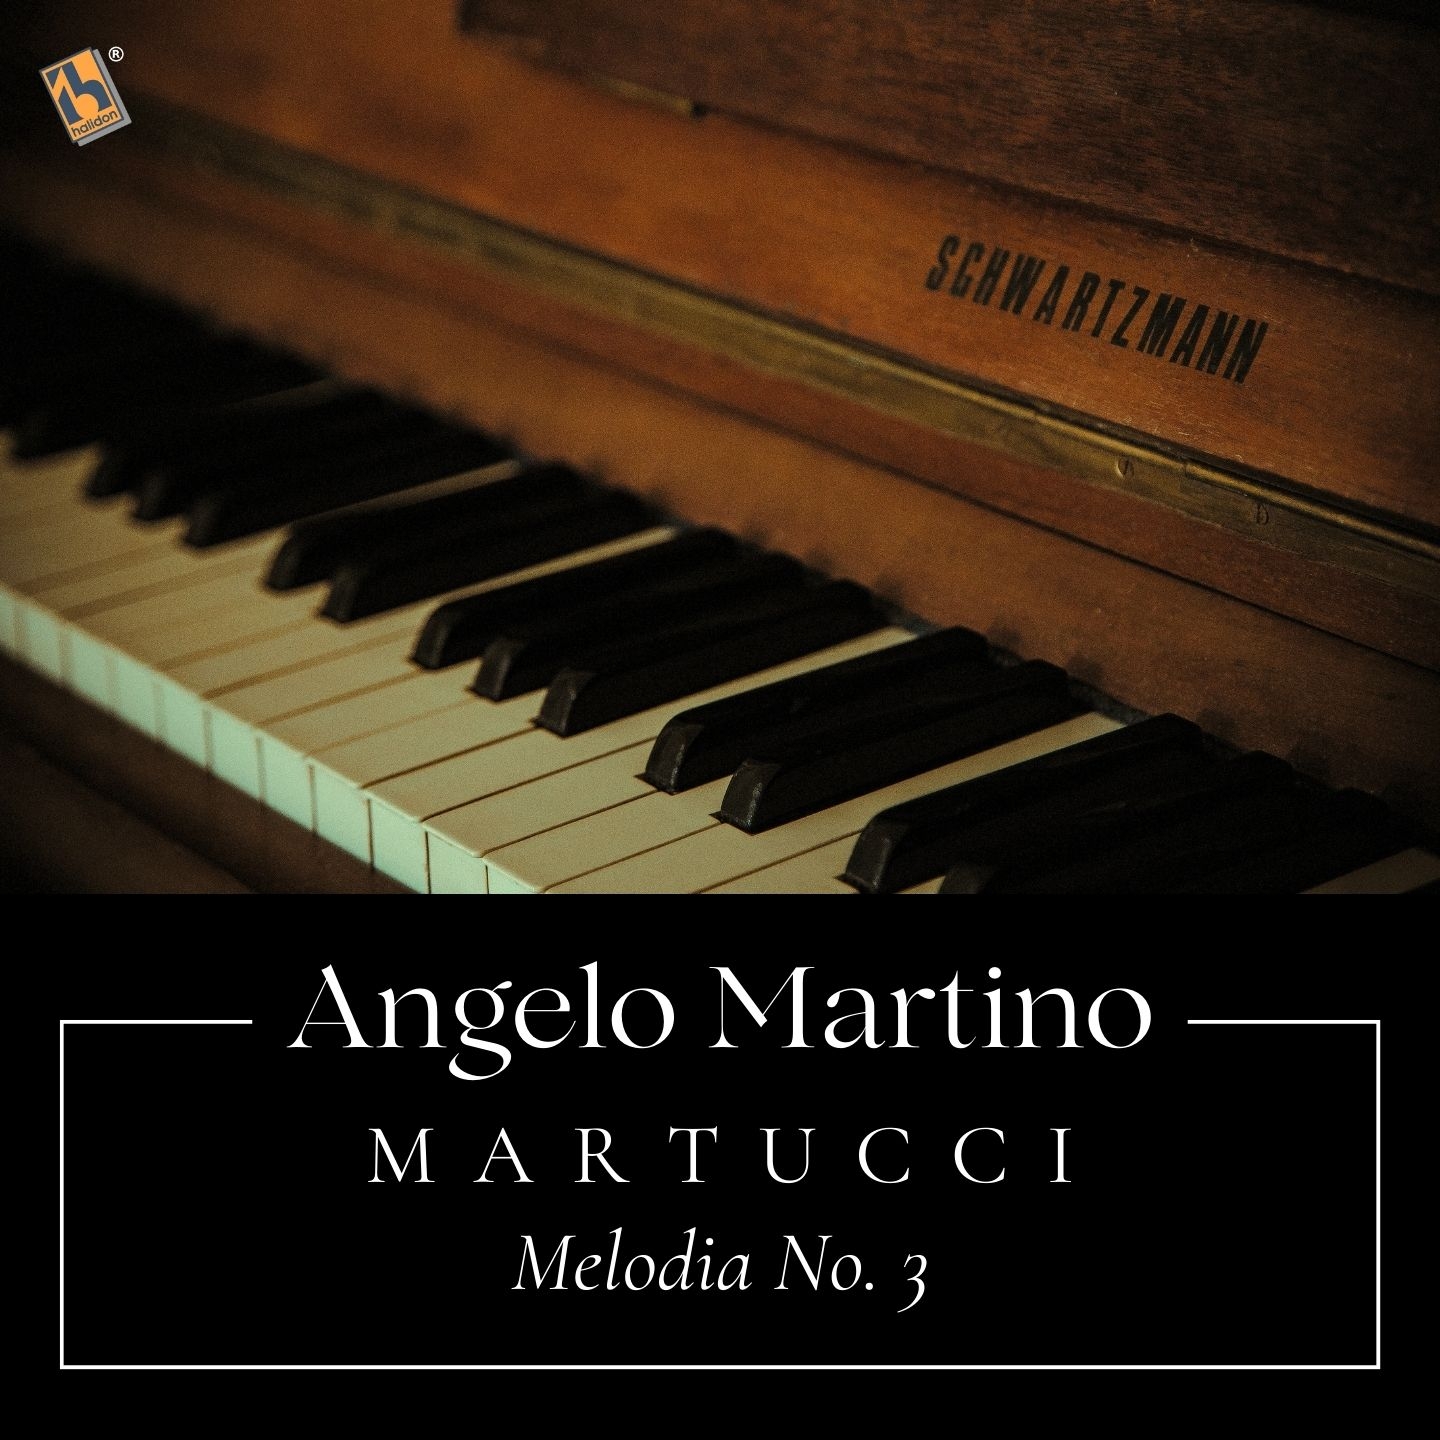 Martucci: Melodia No. 3